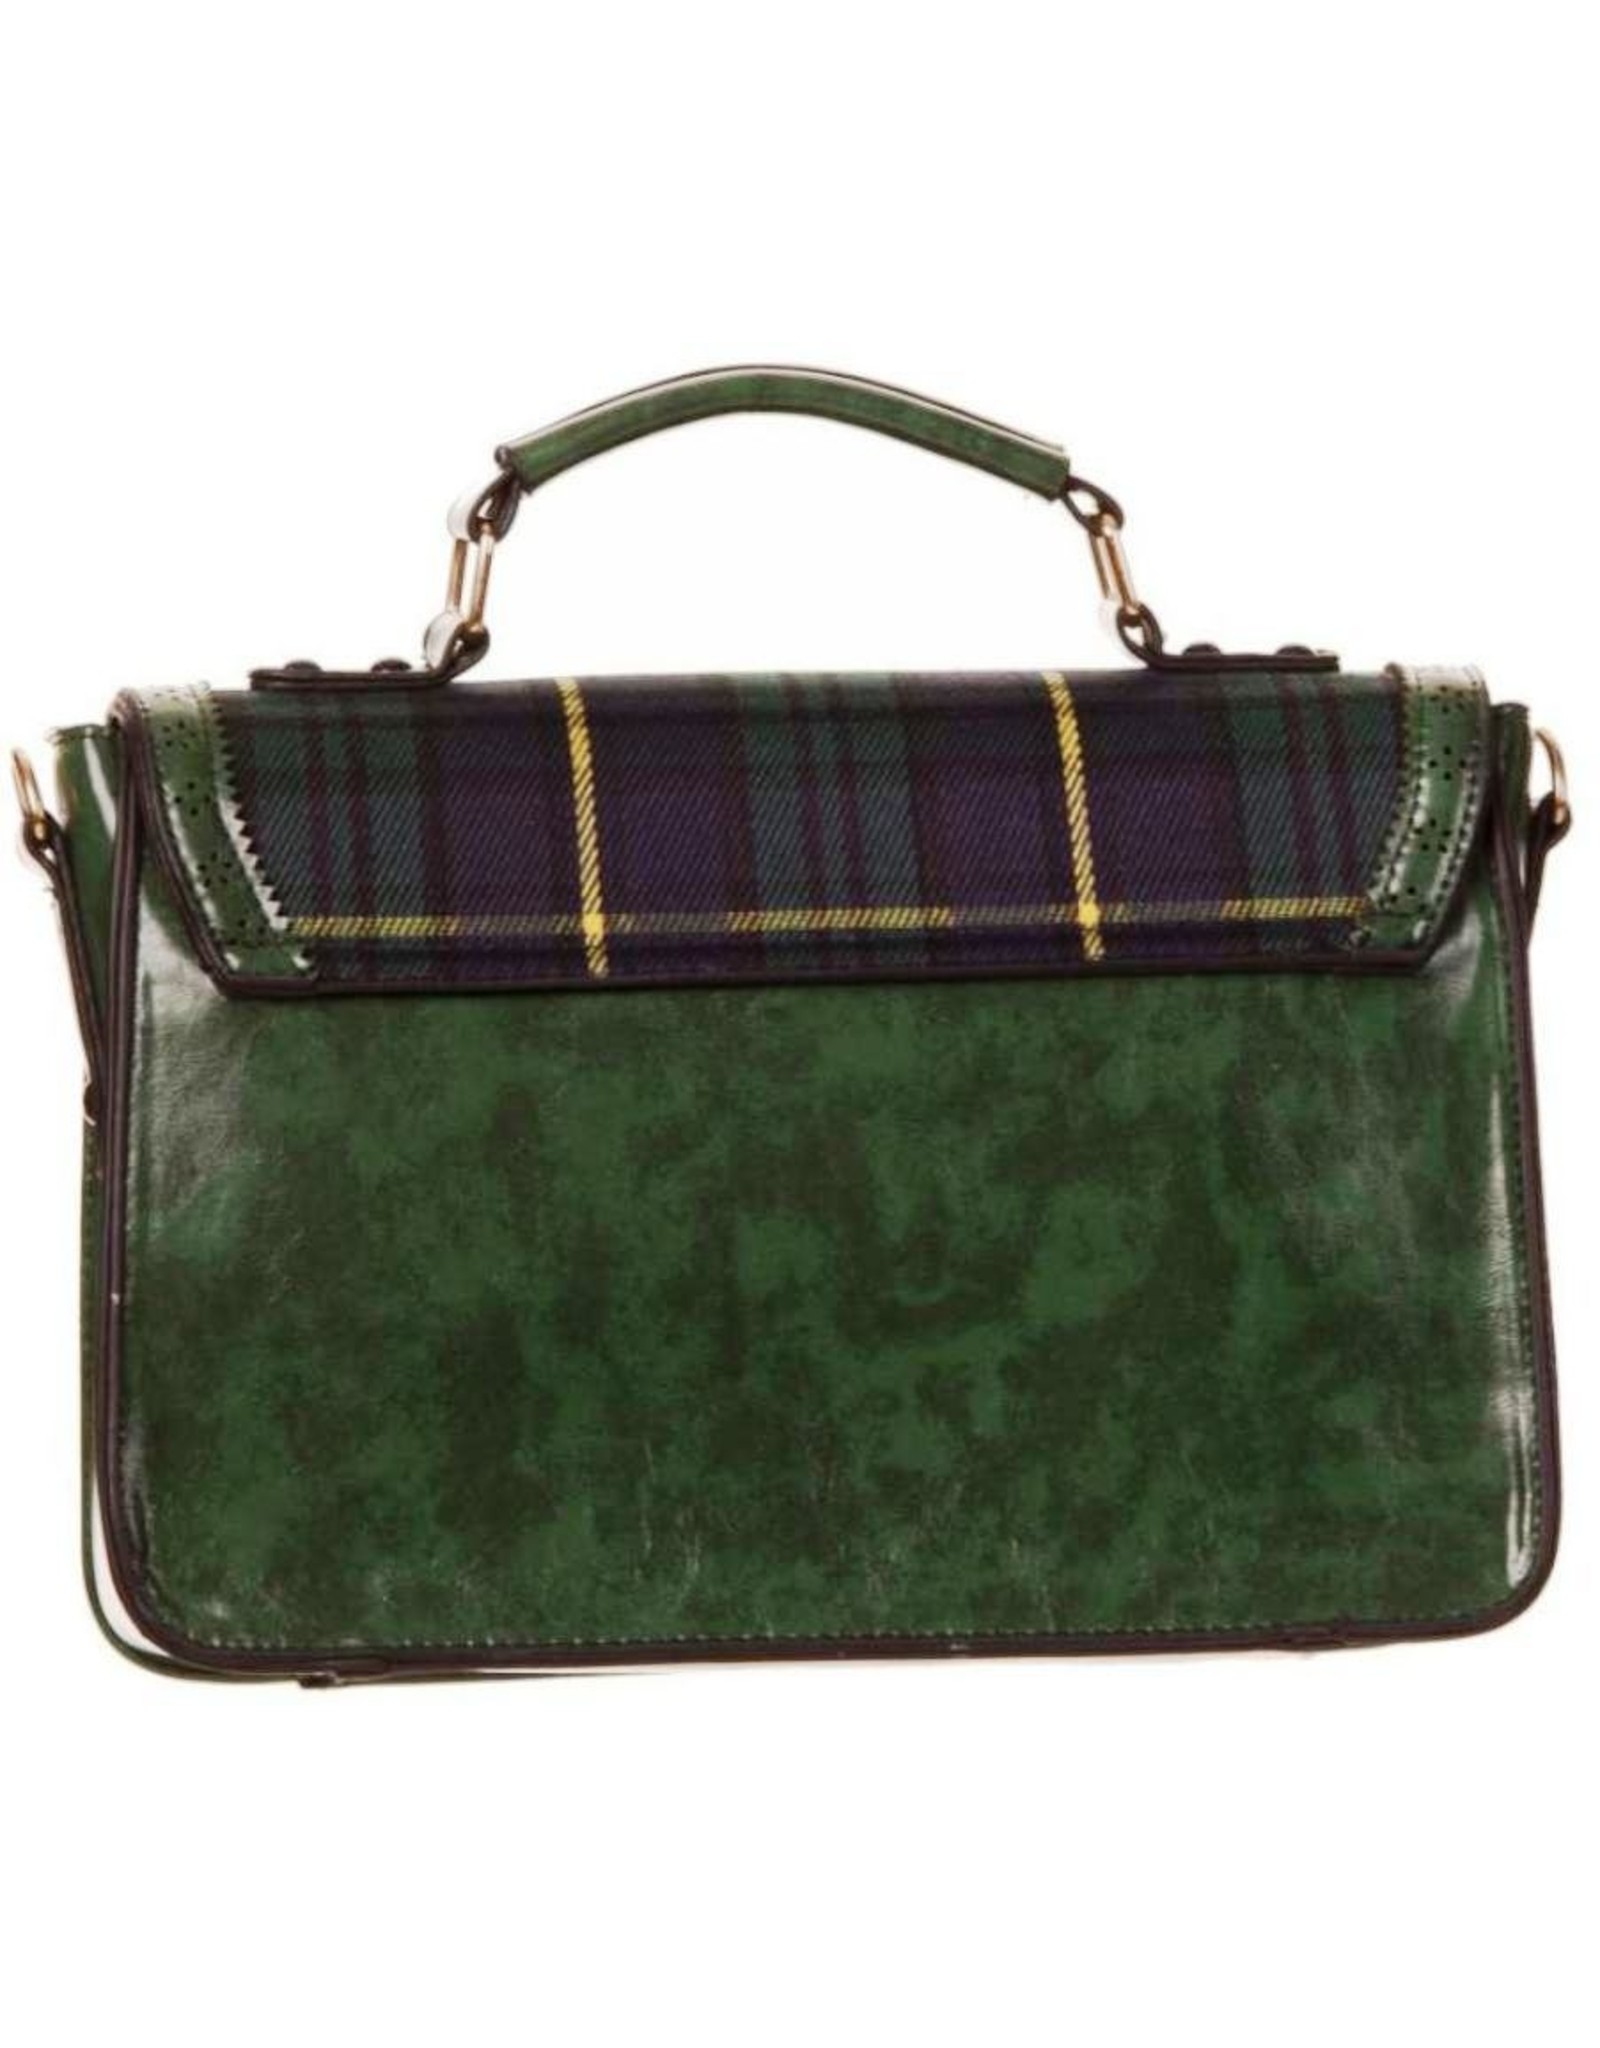 Banned Retro bags  Vintage bags - Banned Retro handbag Tartan green